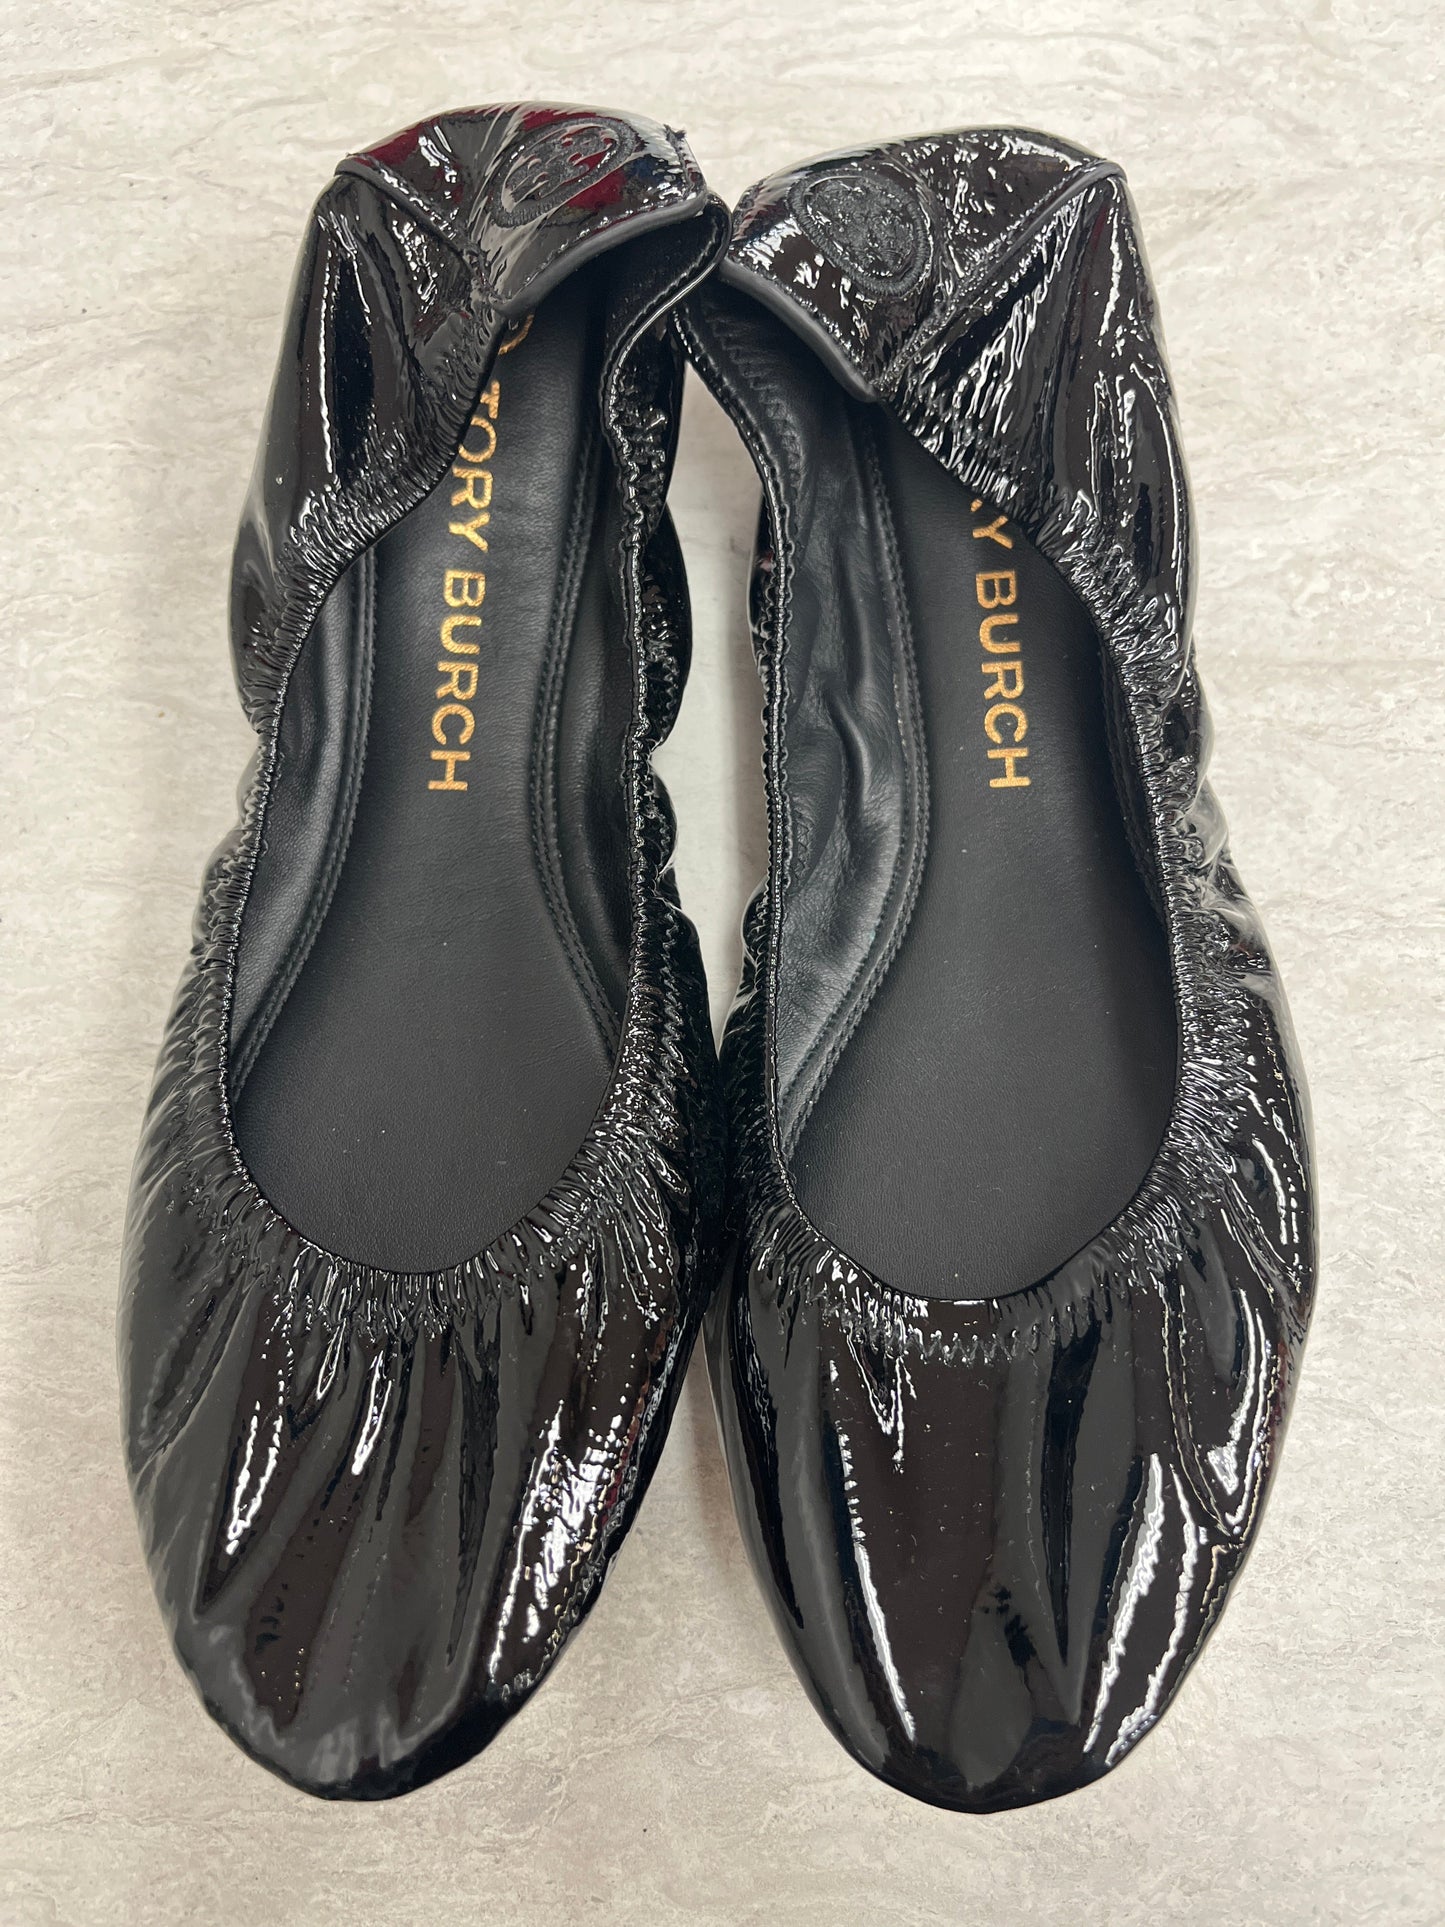 Black Shoes Designer Tory Burch, Size 10.5